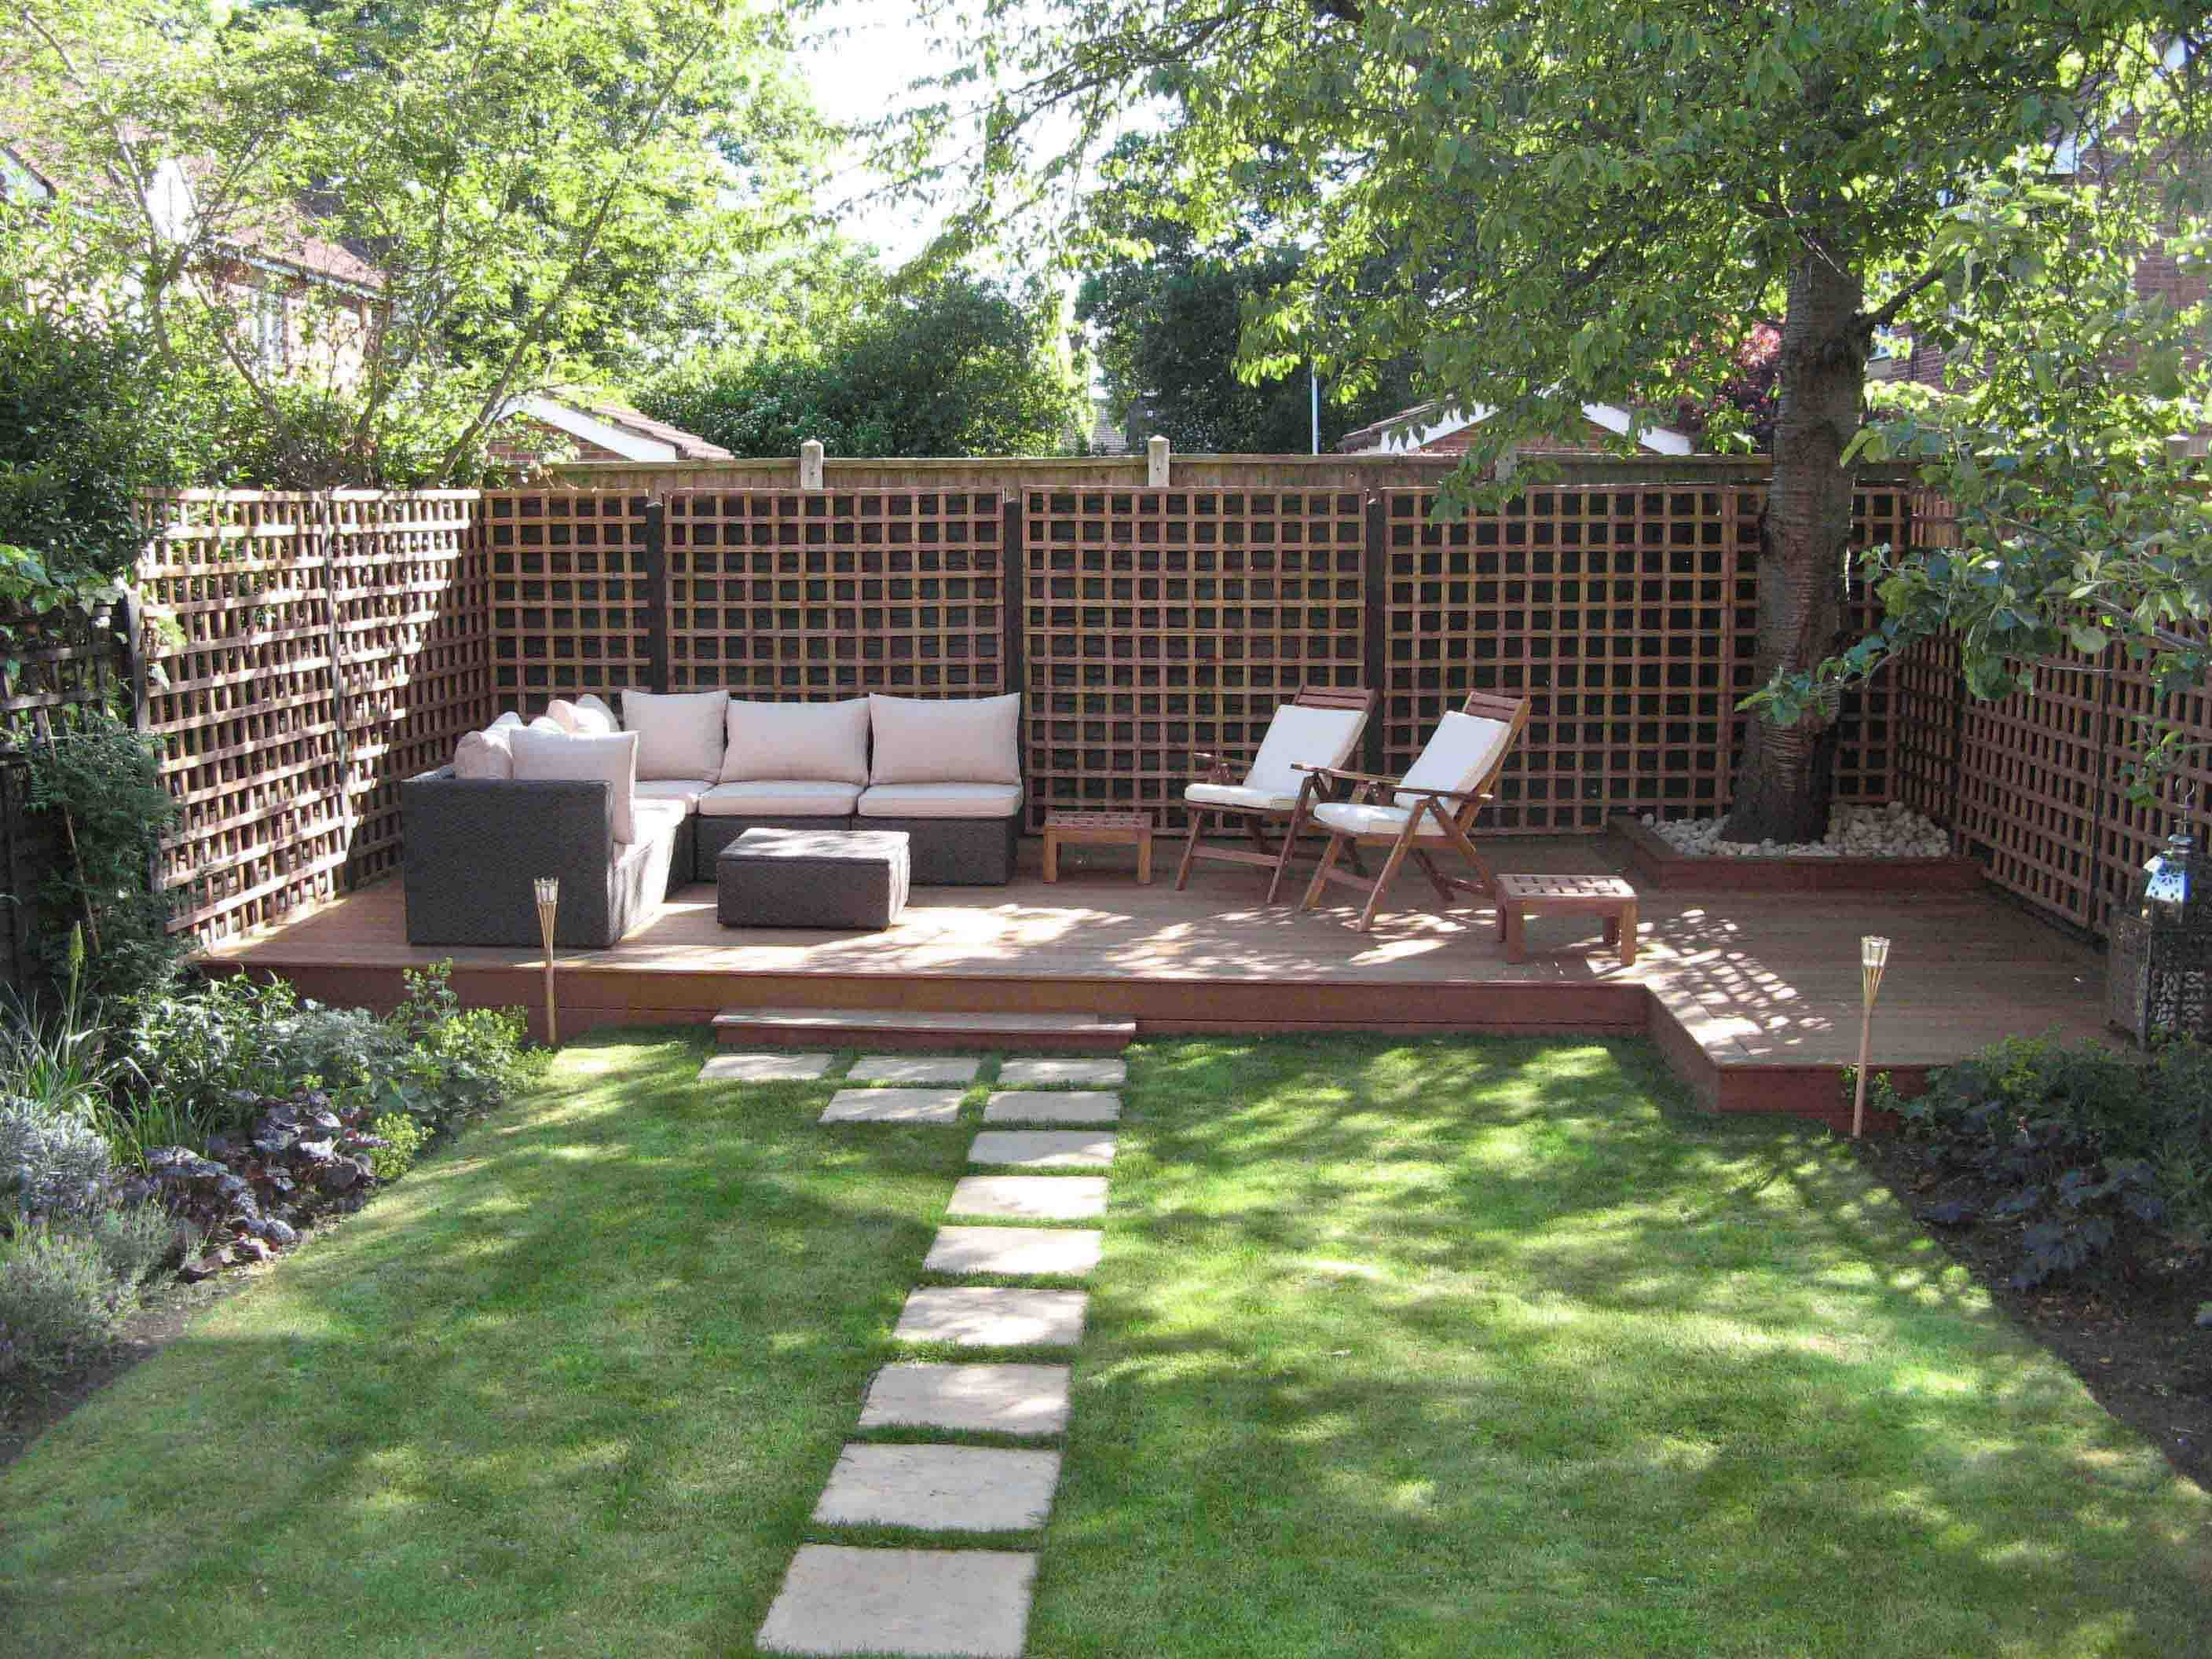 Best ideas about Simple Garden Ideas
. Save or Pin Modern Garden Design Ideas Now.